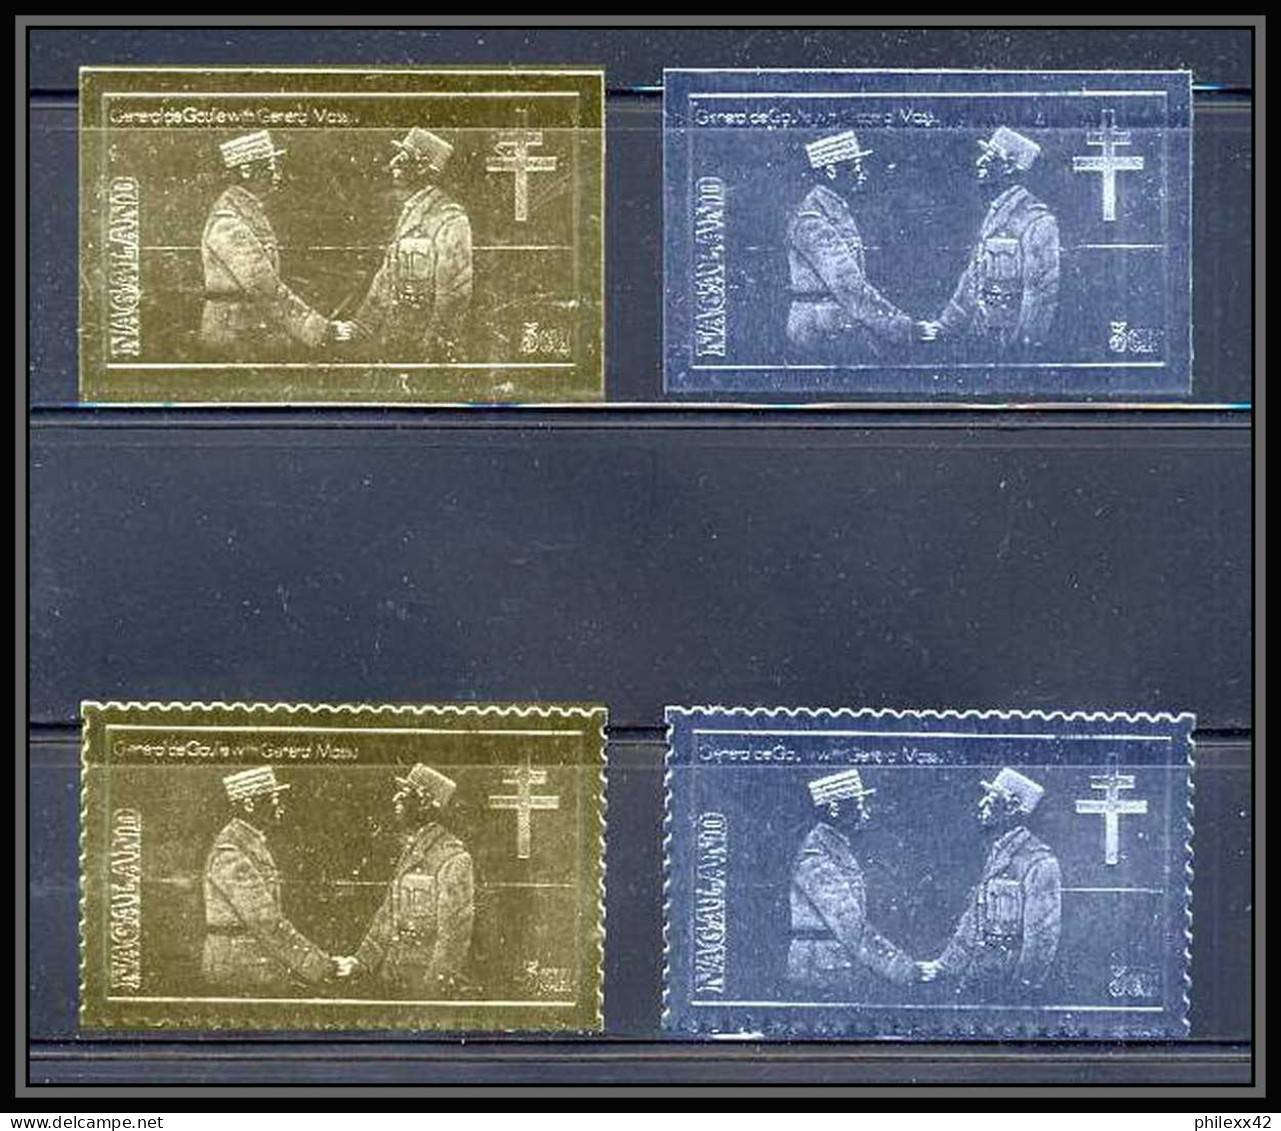 174a Charles De Gaulle - Jacques Massu - Inde (India) 4 Timbres Série Complète Argent (Silver) OR (gold Stamps)  - Ortsausgaben